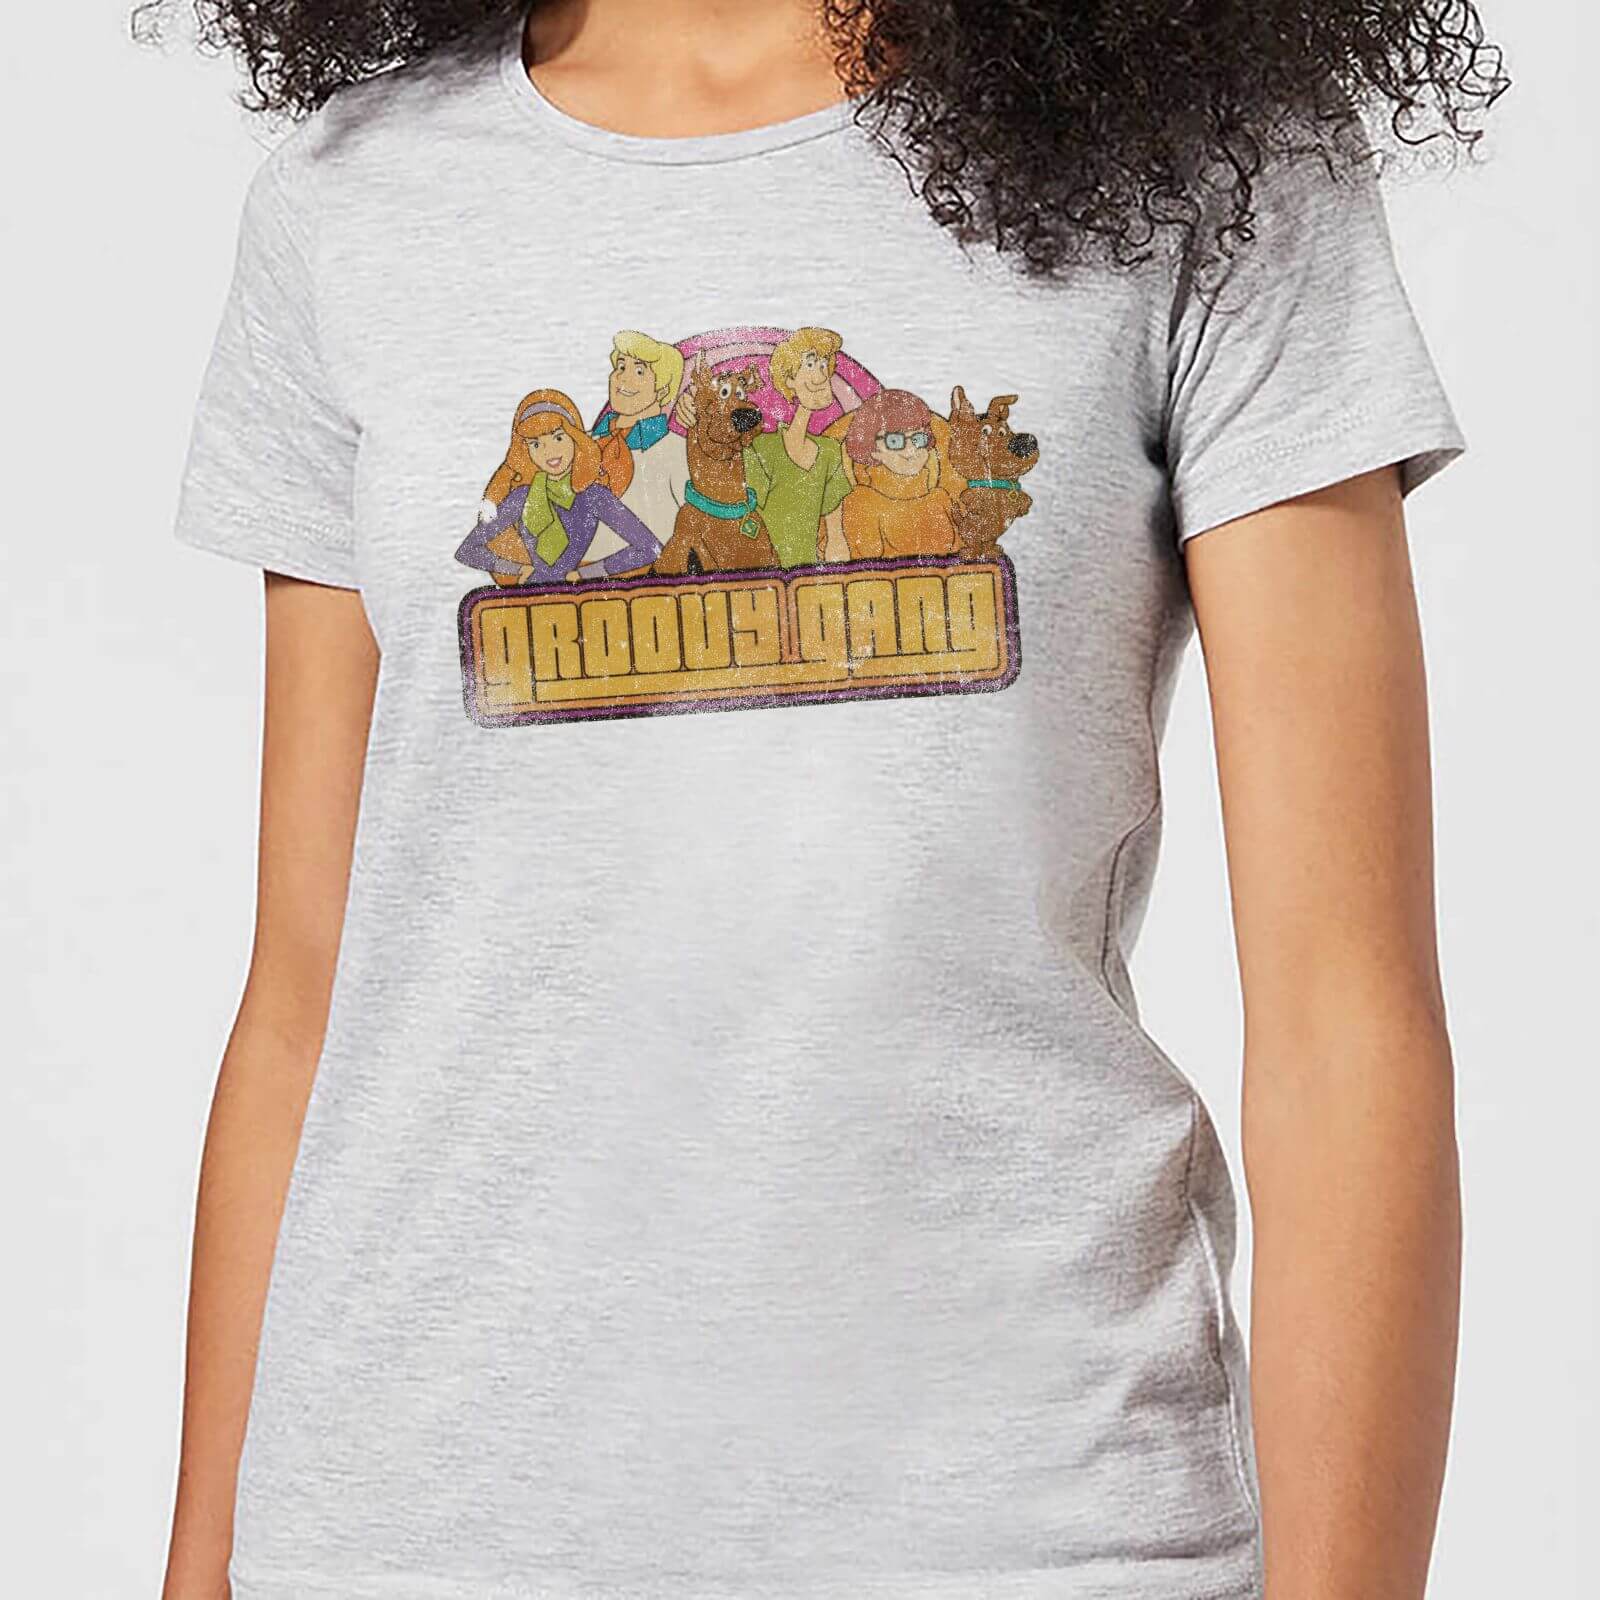 Scooby Doo Groovy Gang Women's T-Shirt - Grey - M